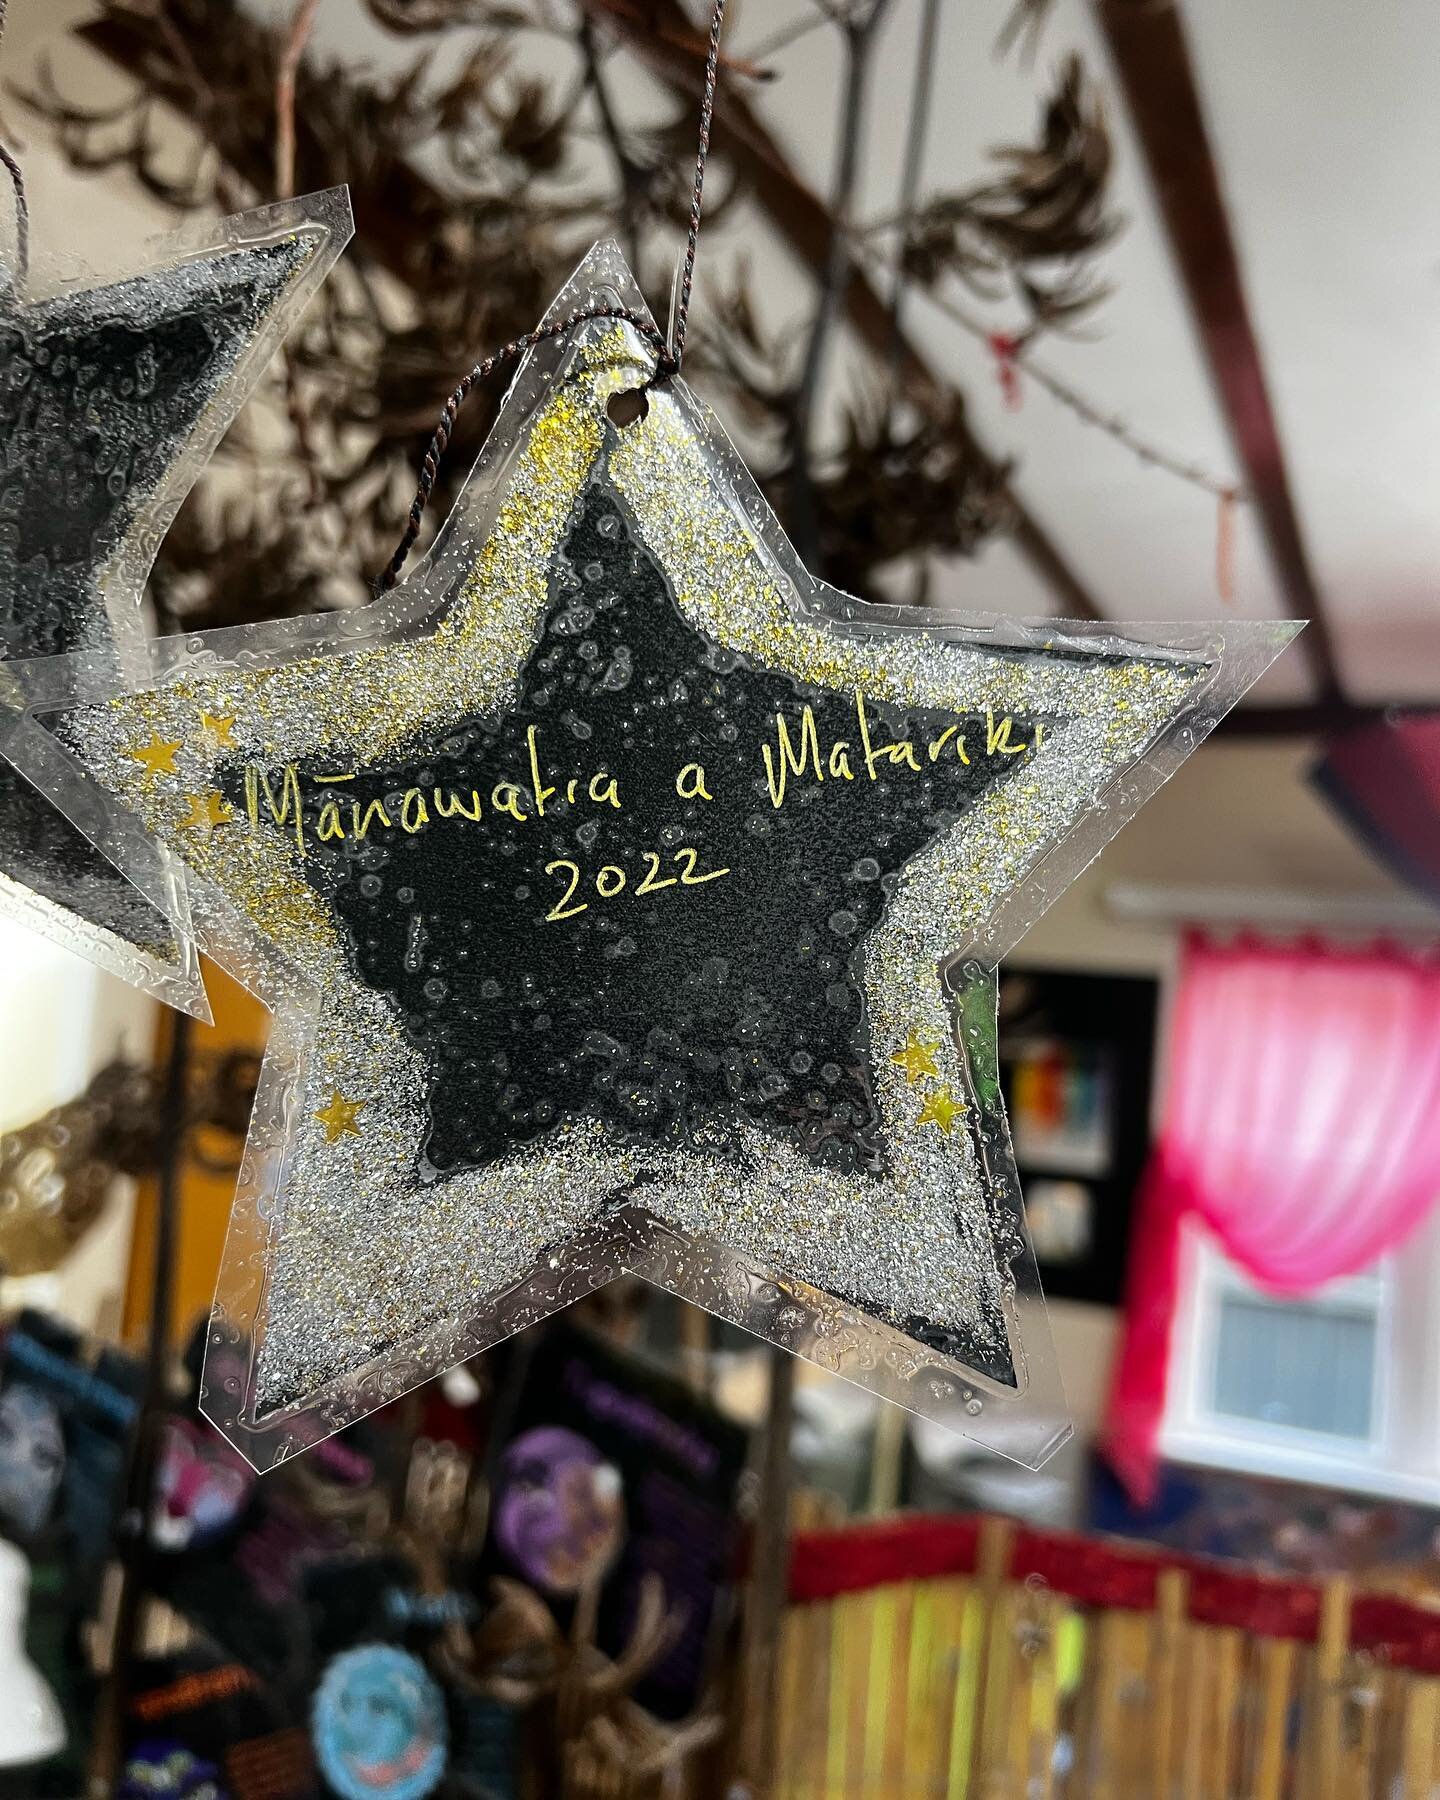 Mānawatia a Matariki!
Having fun with making Matariki stars and glitter art for Matariki&hellip;.
#matariki2022 #matariki #younginvestigators #tuiearlylearners #goteamtui